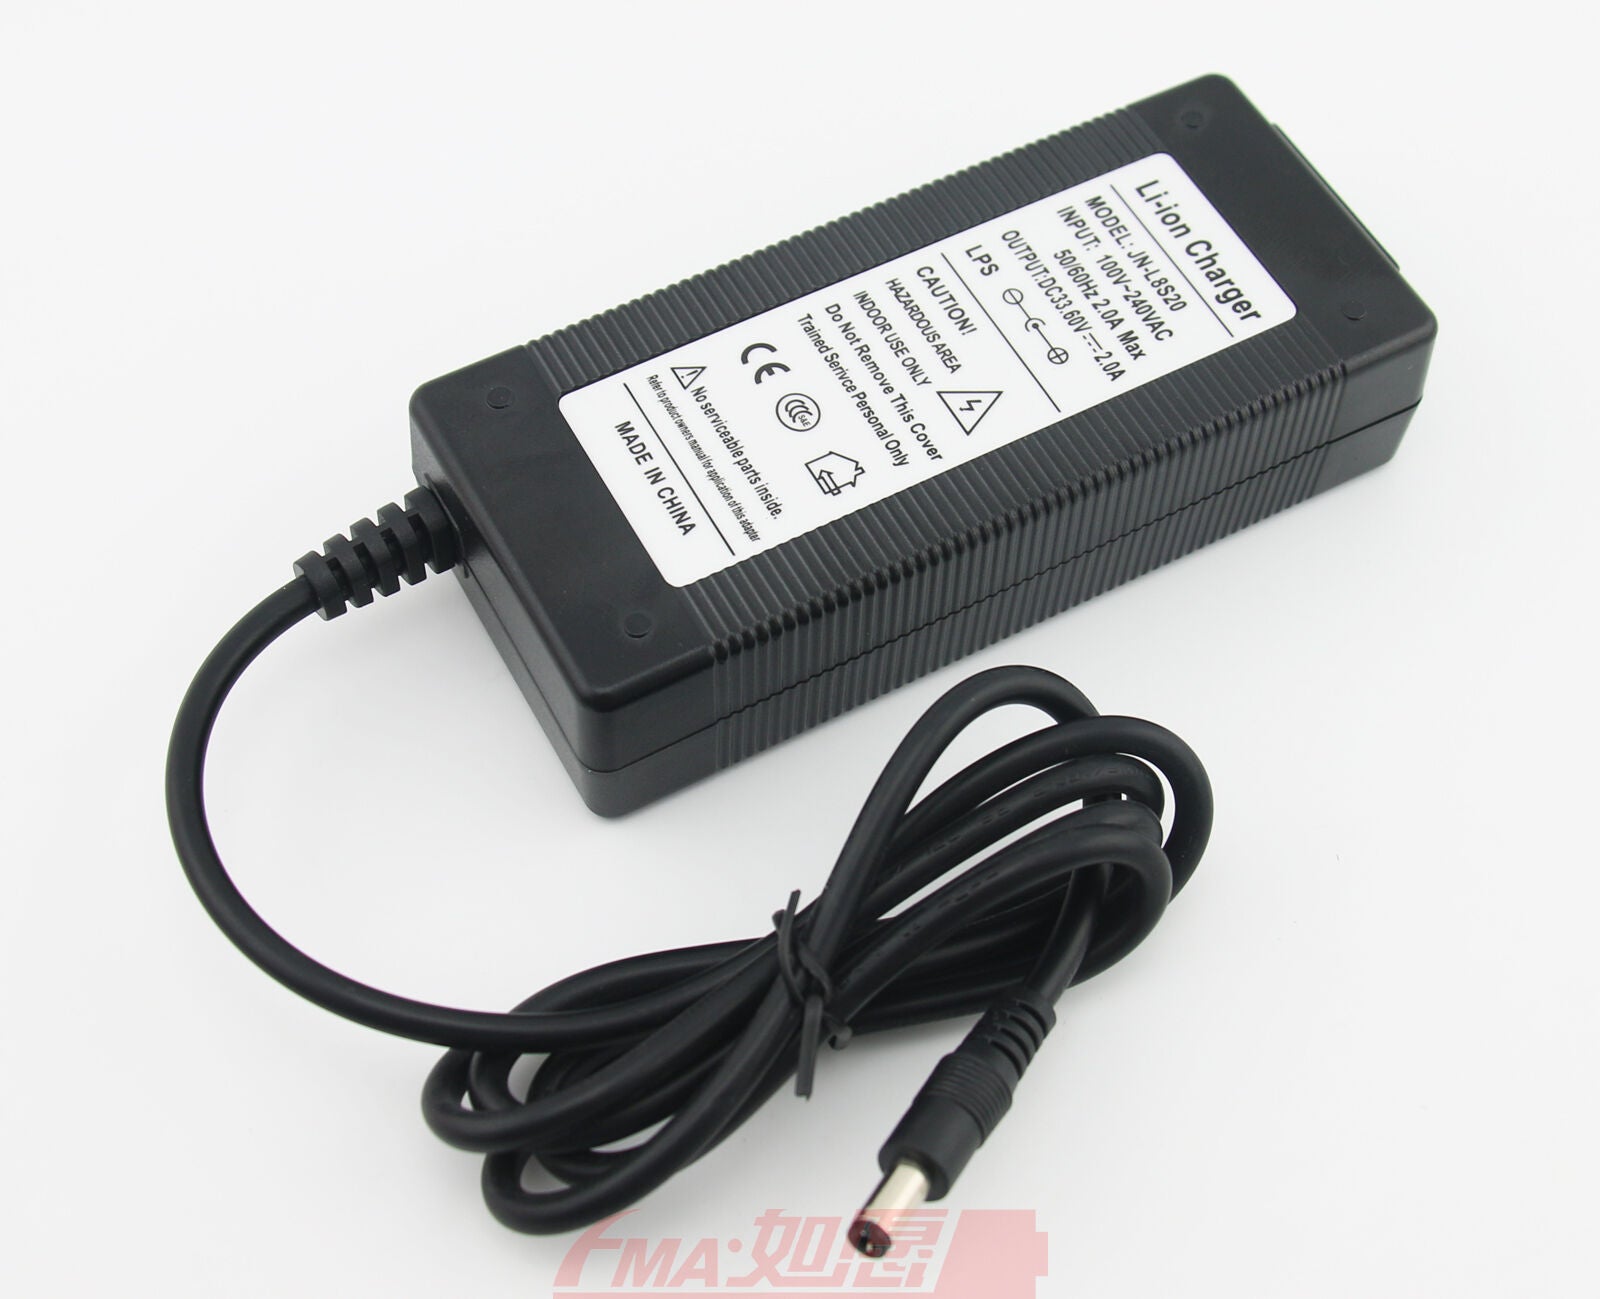 EBike 8S 28.8V 29.6V Li-ion Li-Po Battery Intelligent Smart Charger 33.6V 2A UST